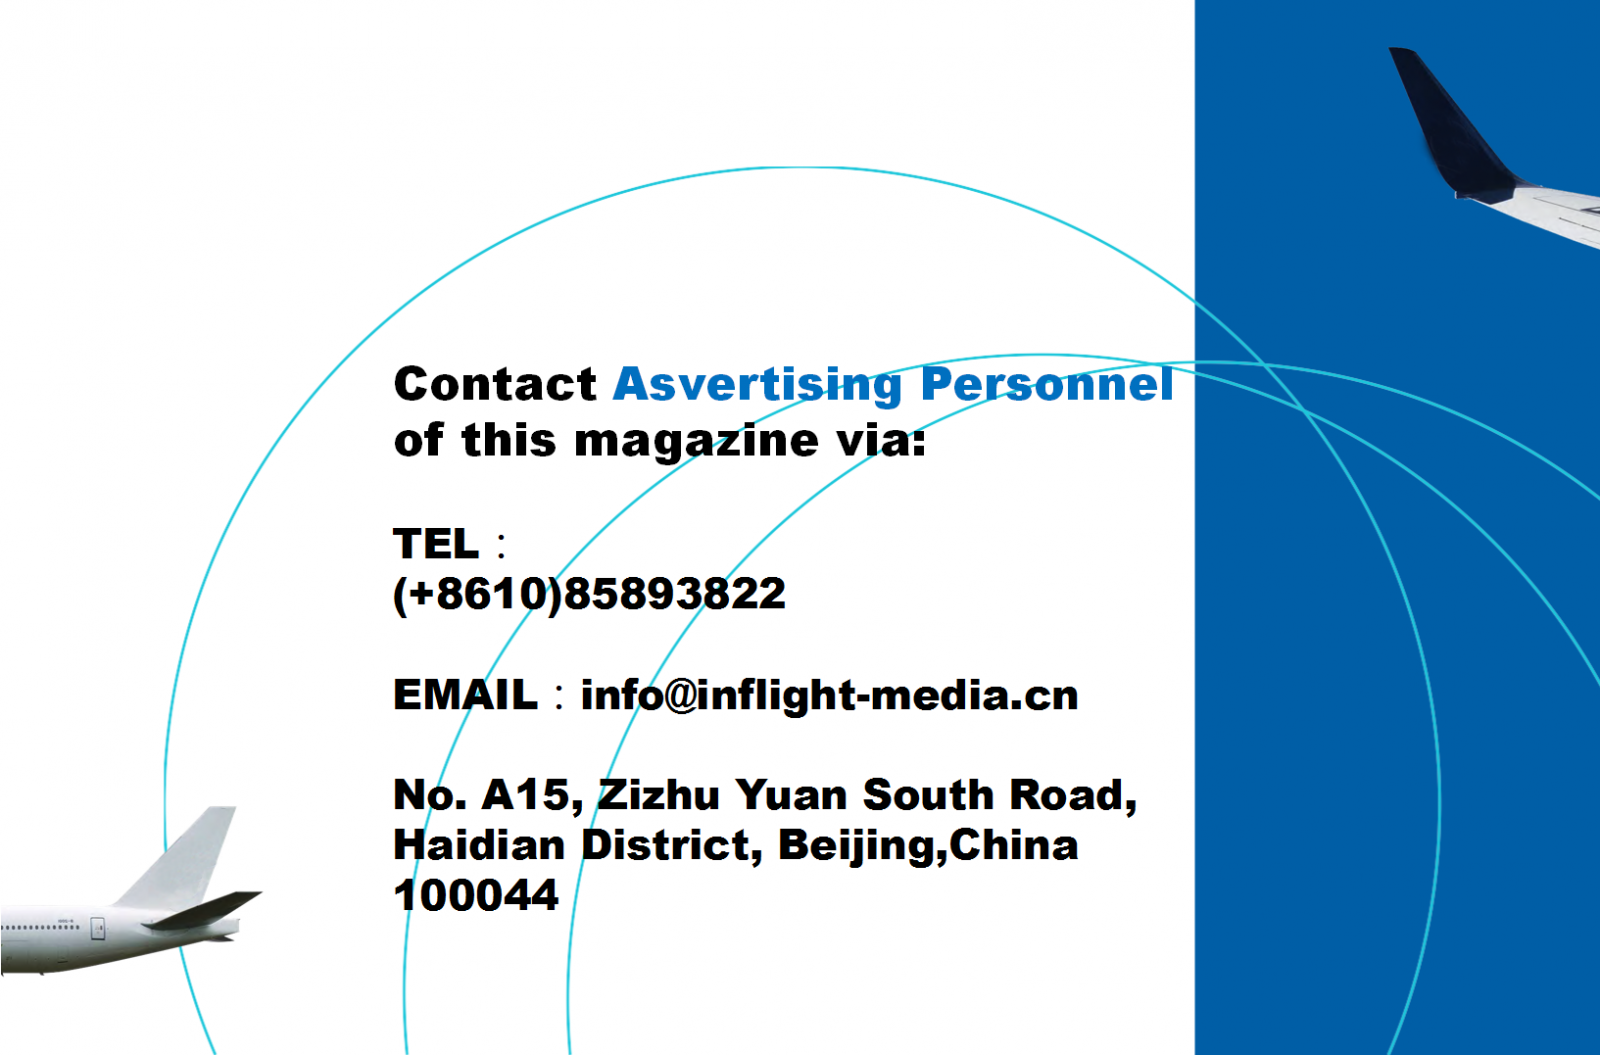 Shanghai airlines magazine advertising